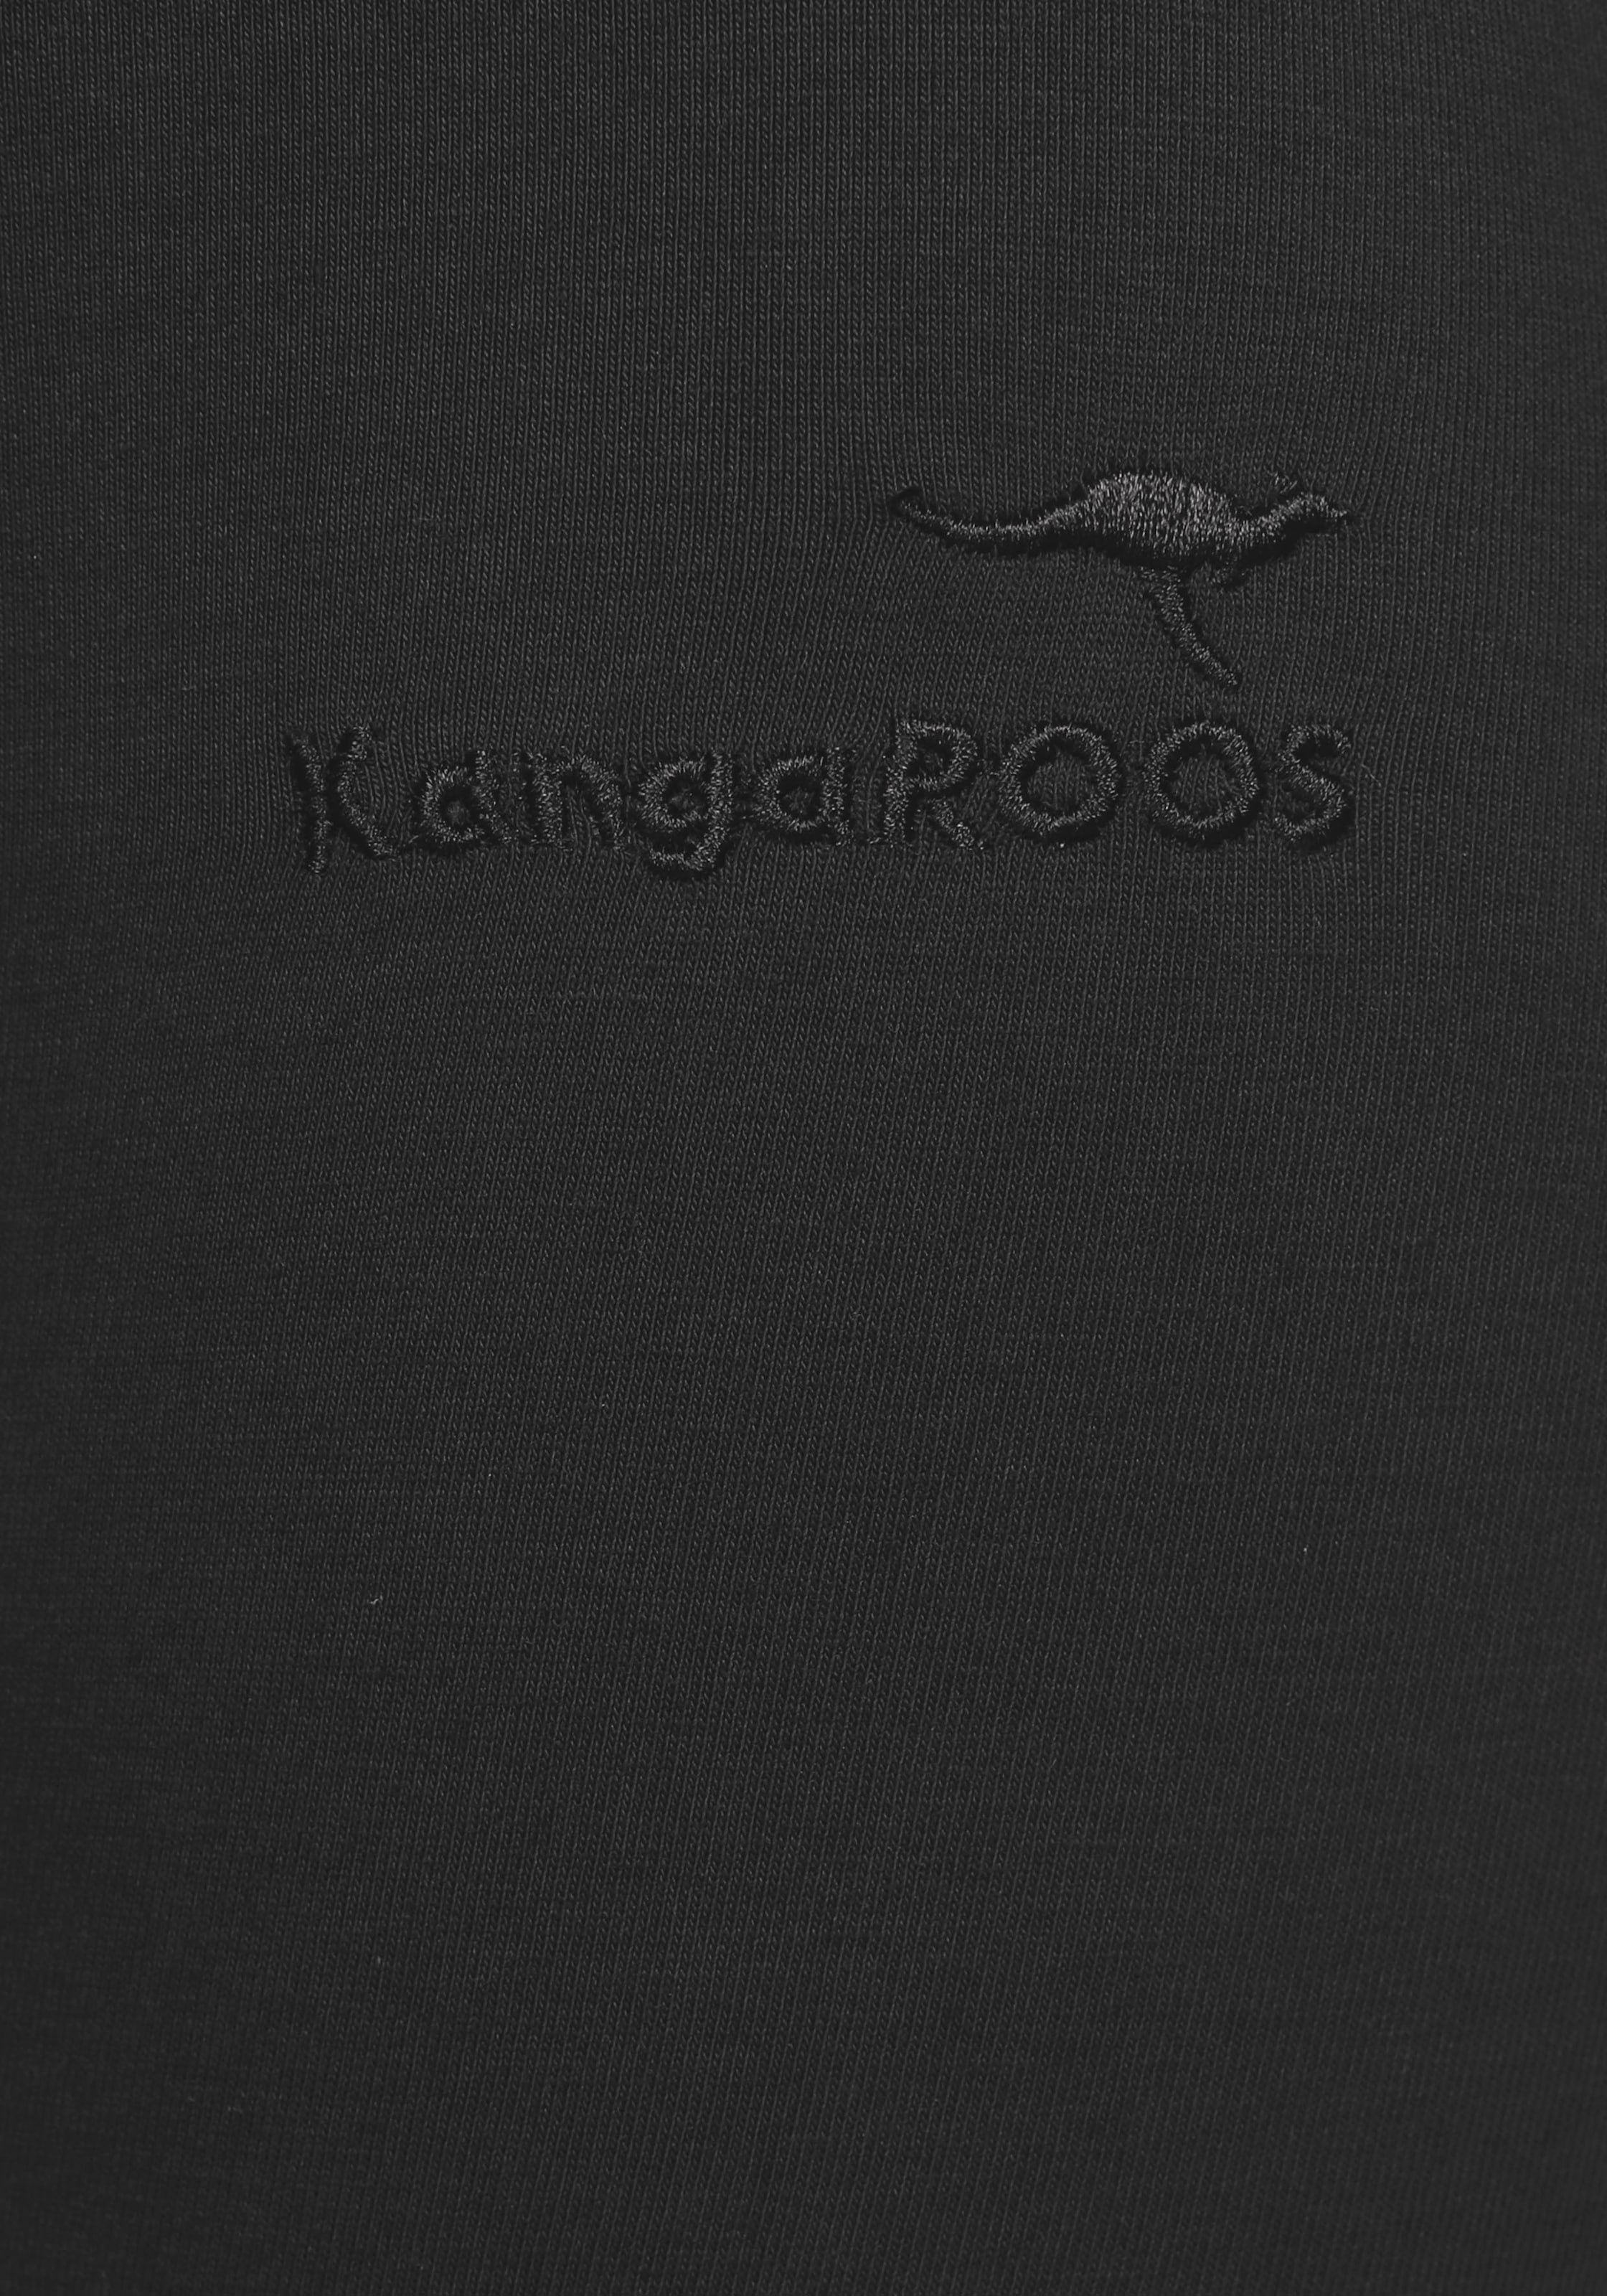 bedruckten mit Leggings, KangaROOS Aufschlag online